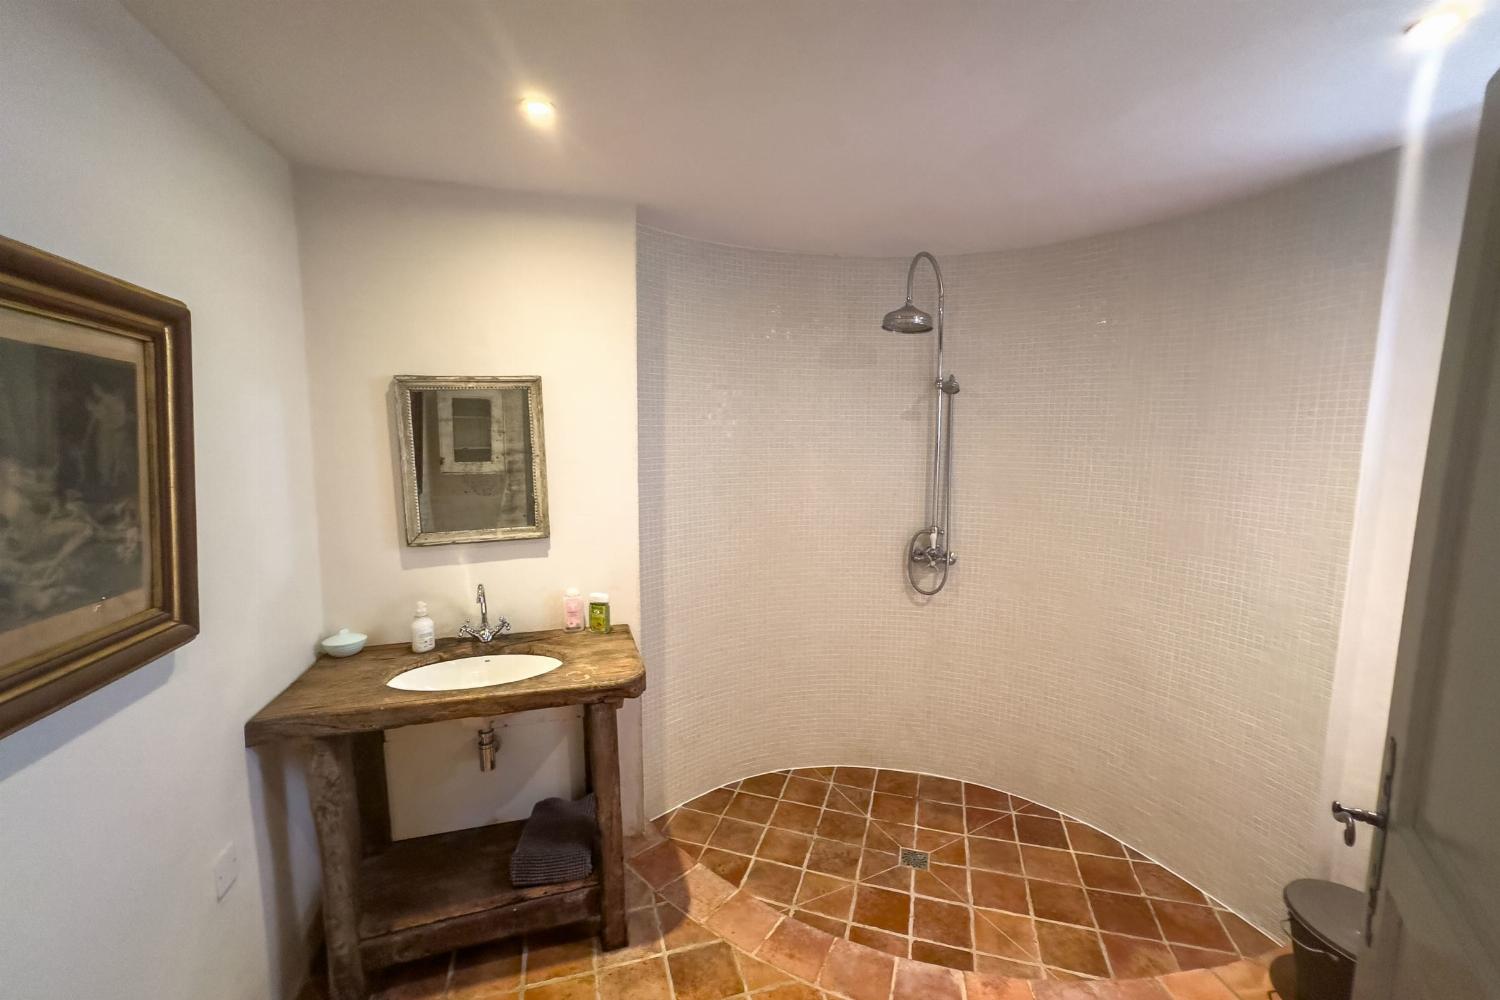 Cinema house bathroom | Holiday accommodation in Tarn-en-Garonne